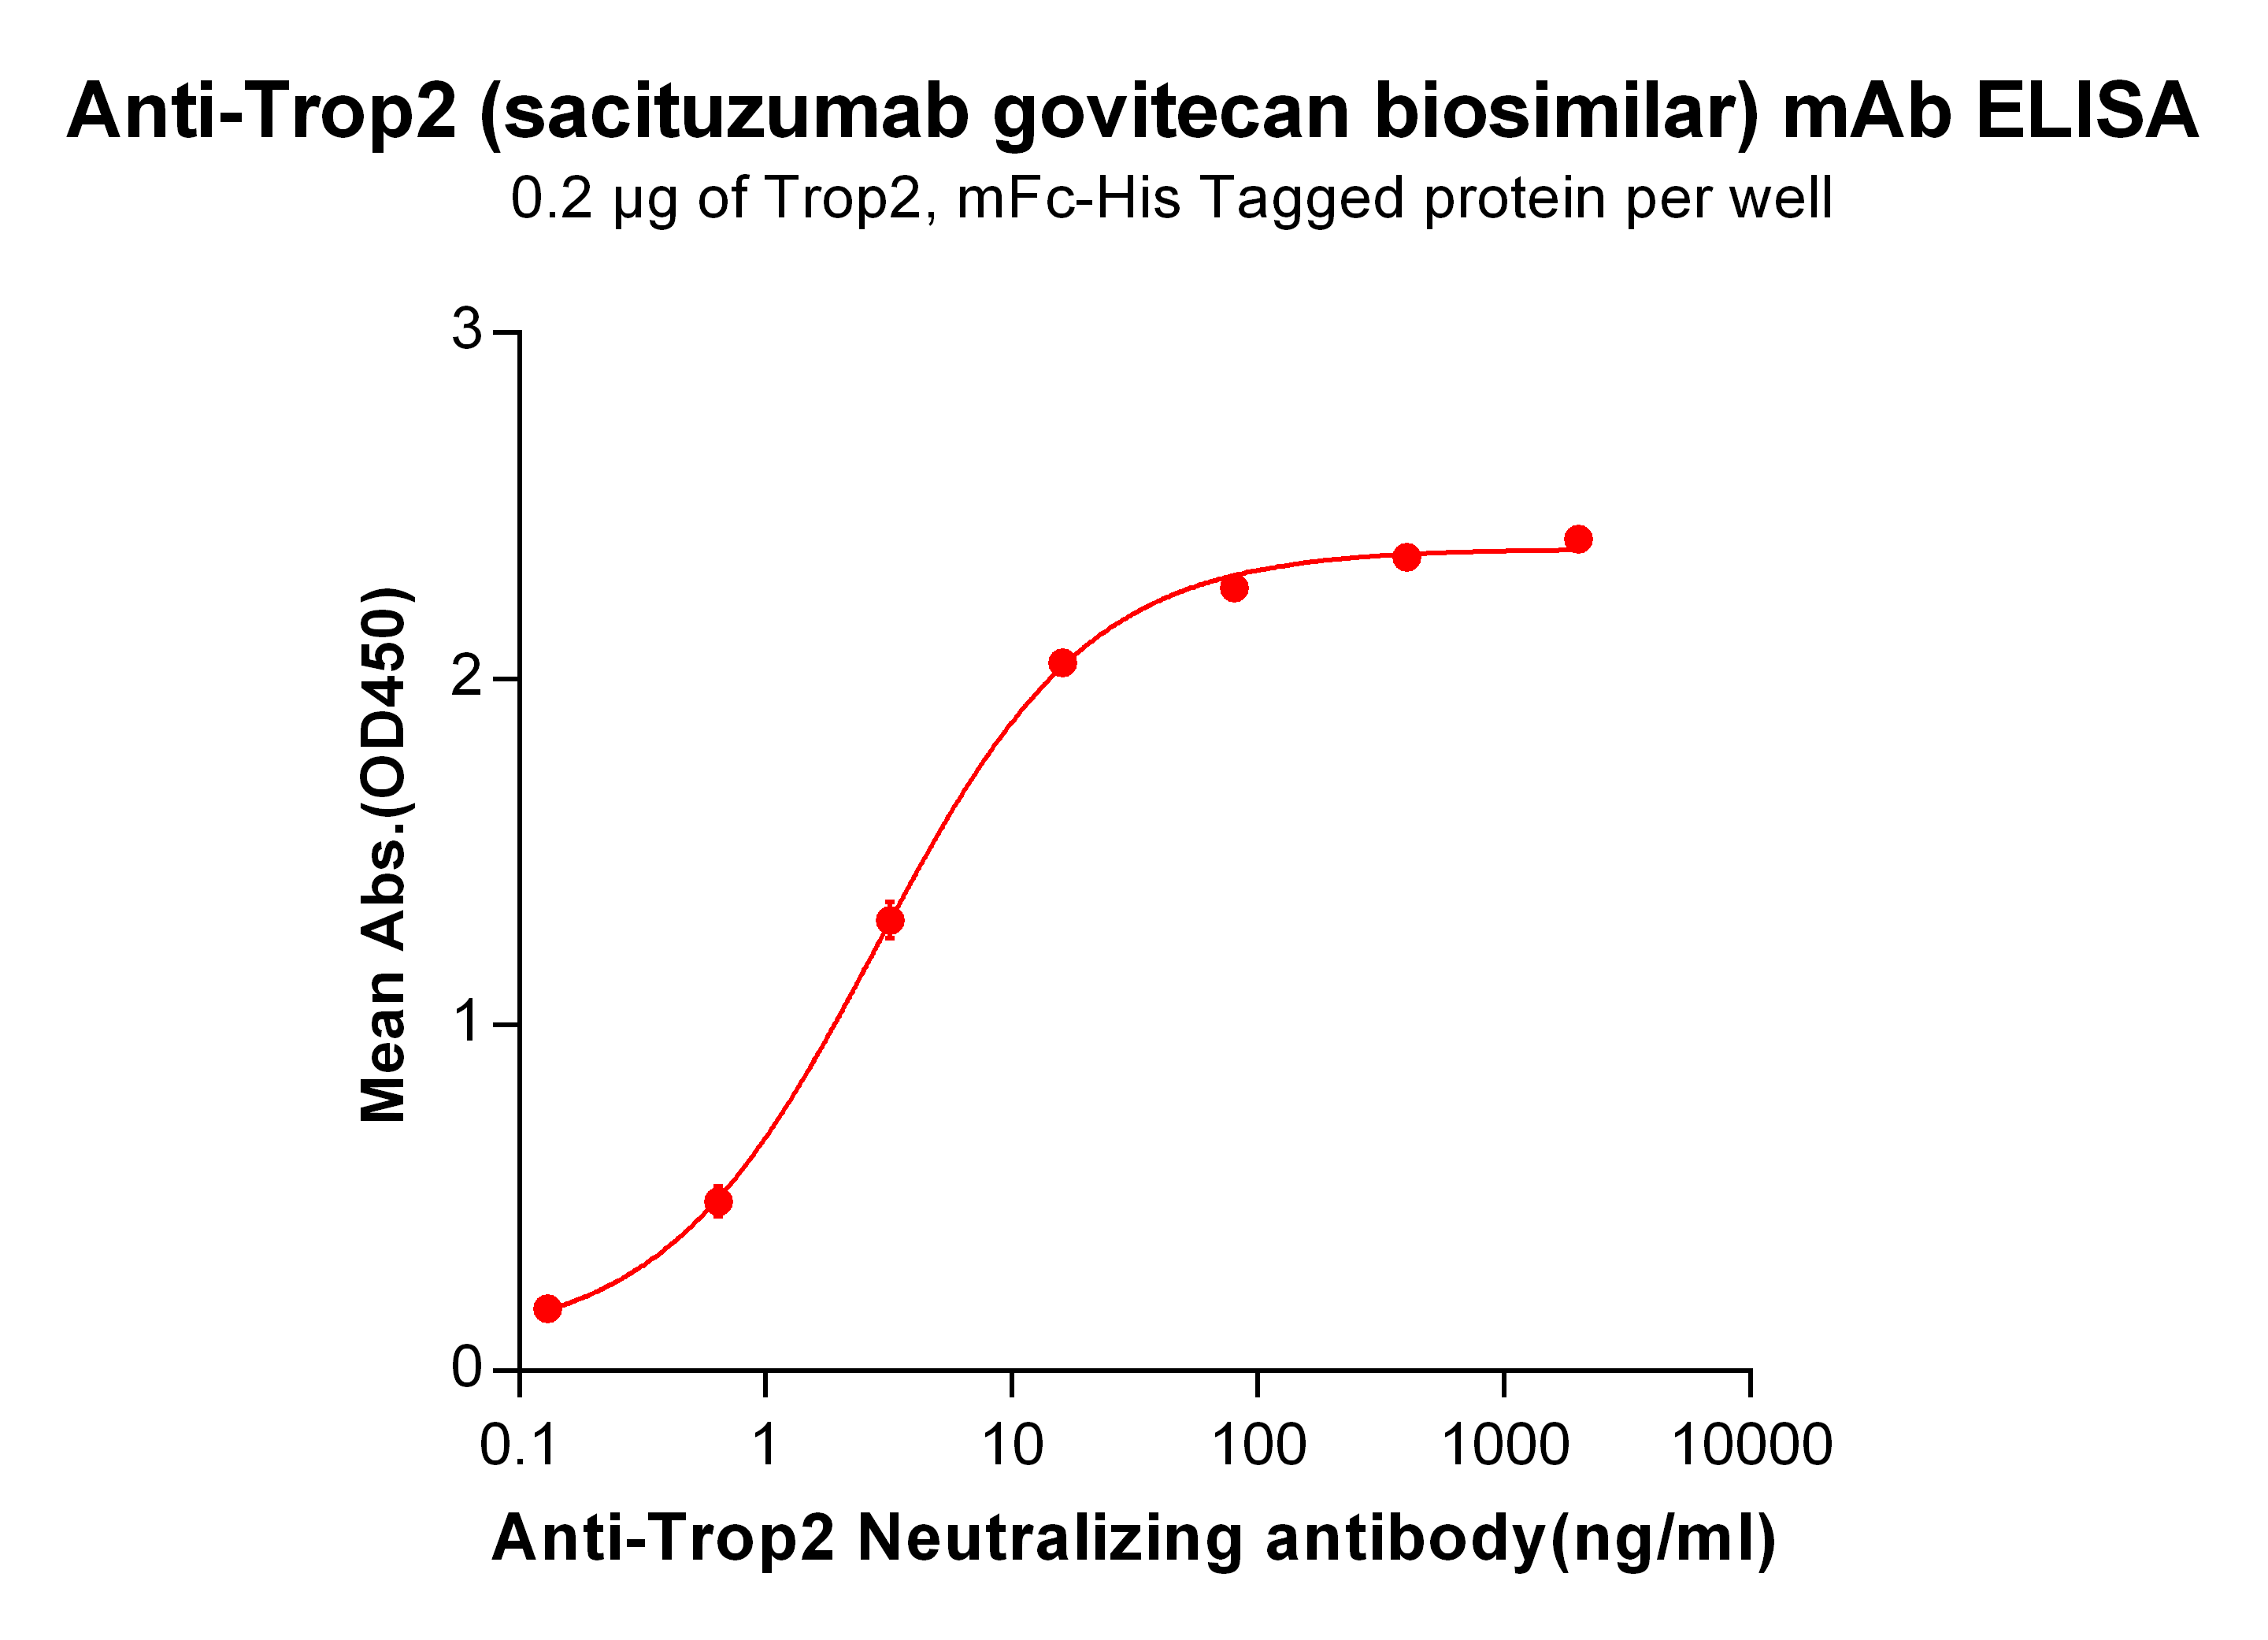 BME100023-Anti-Trop2-sacituzumab-biosimilar-mAb-Elisa-fig1.png